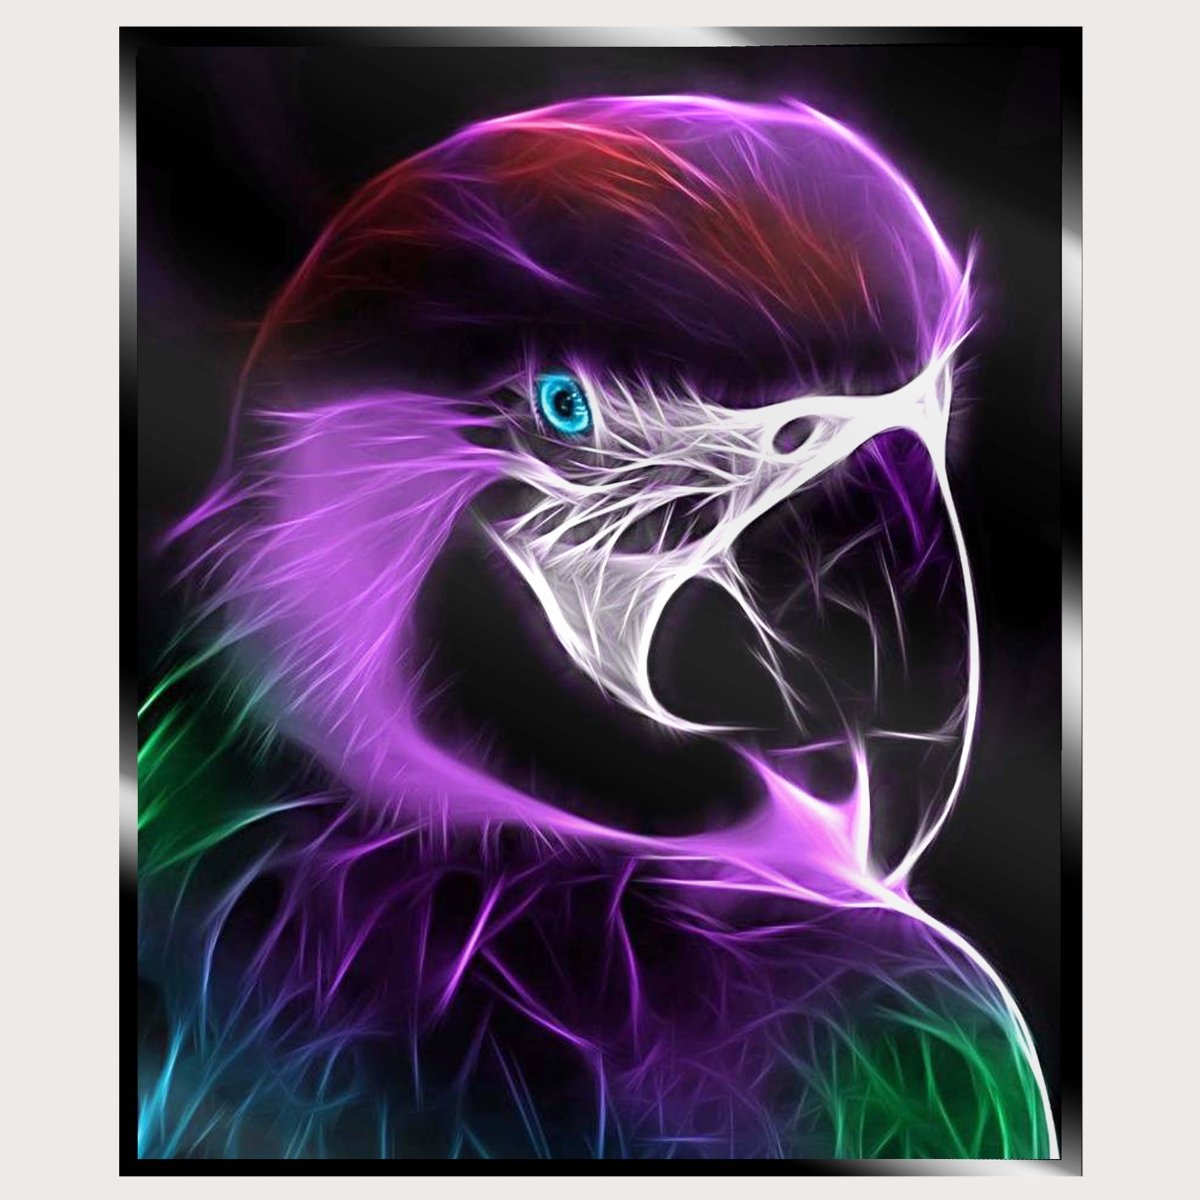 Illuminated Wall Art - Birds of Prey - madaboutneon